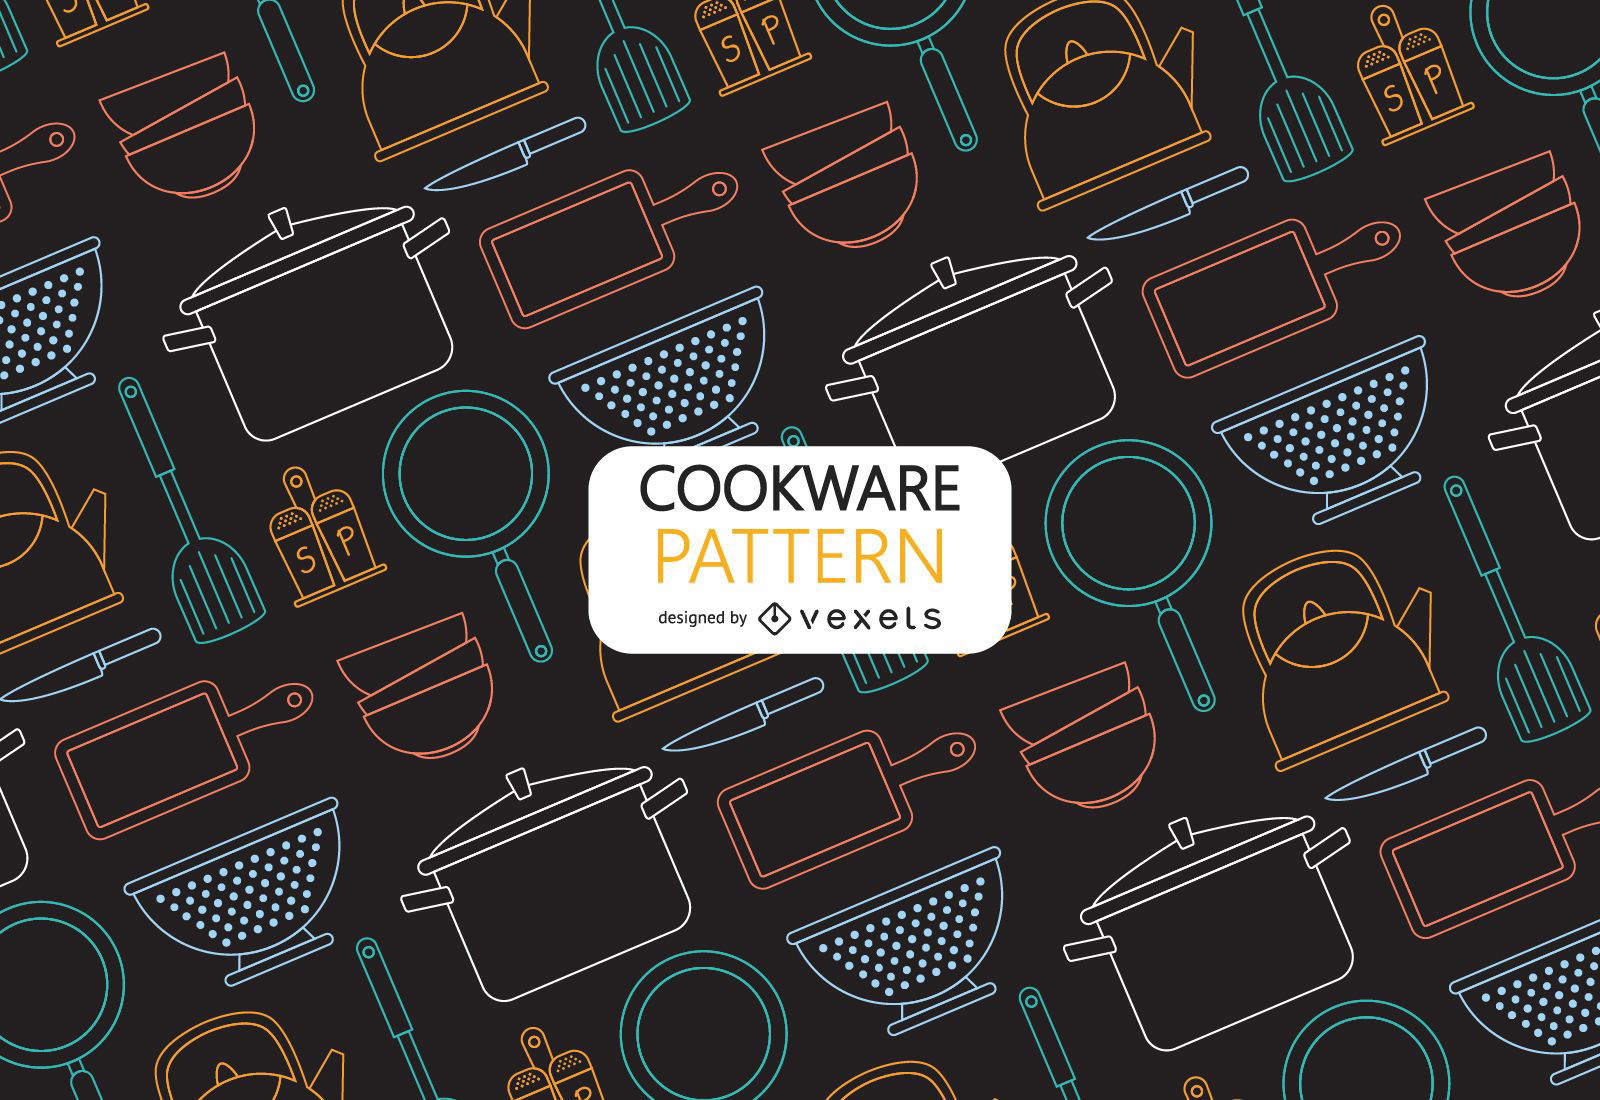 Cookware Pattern